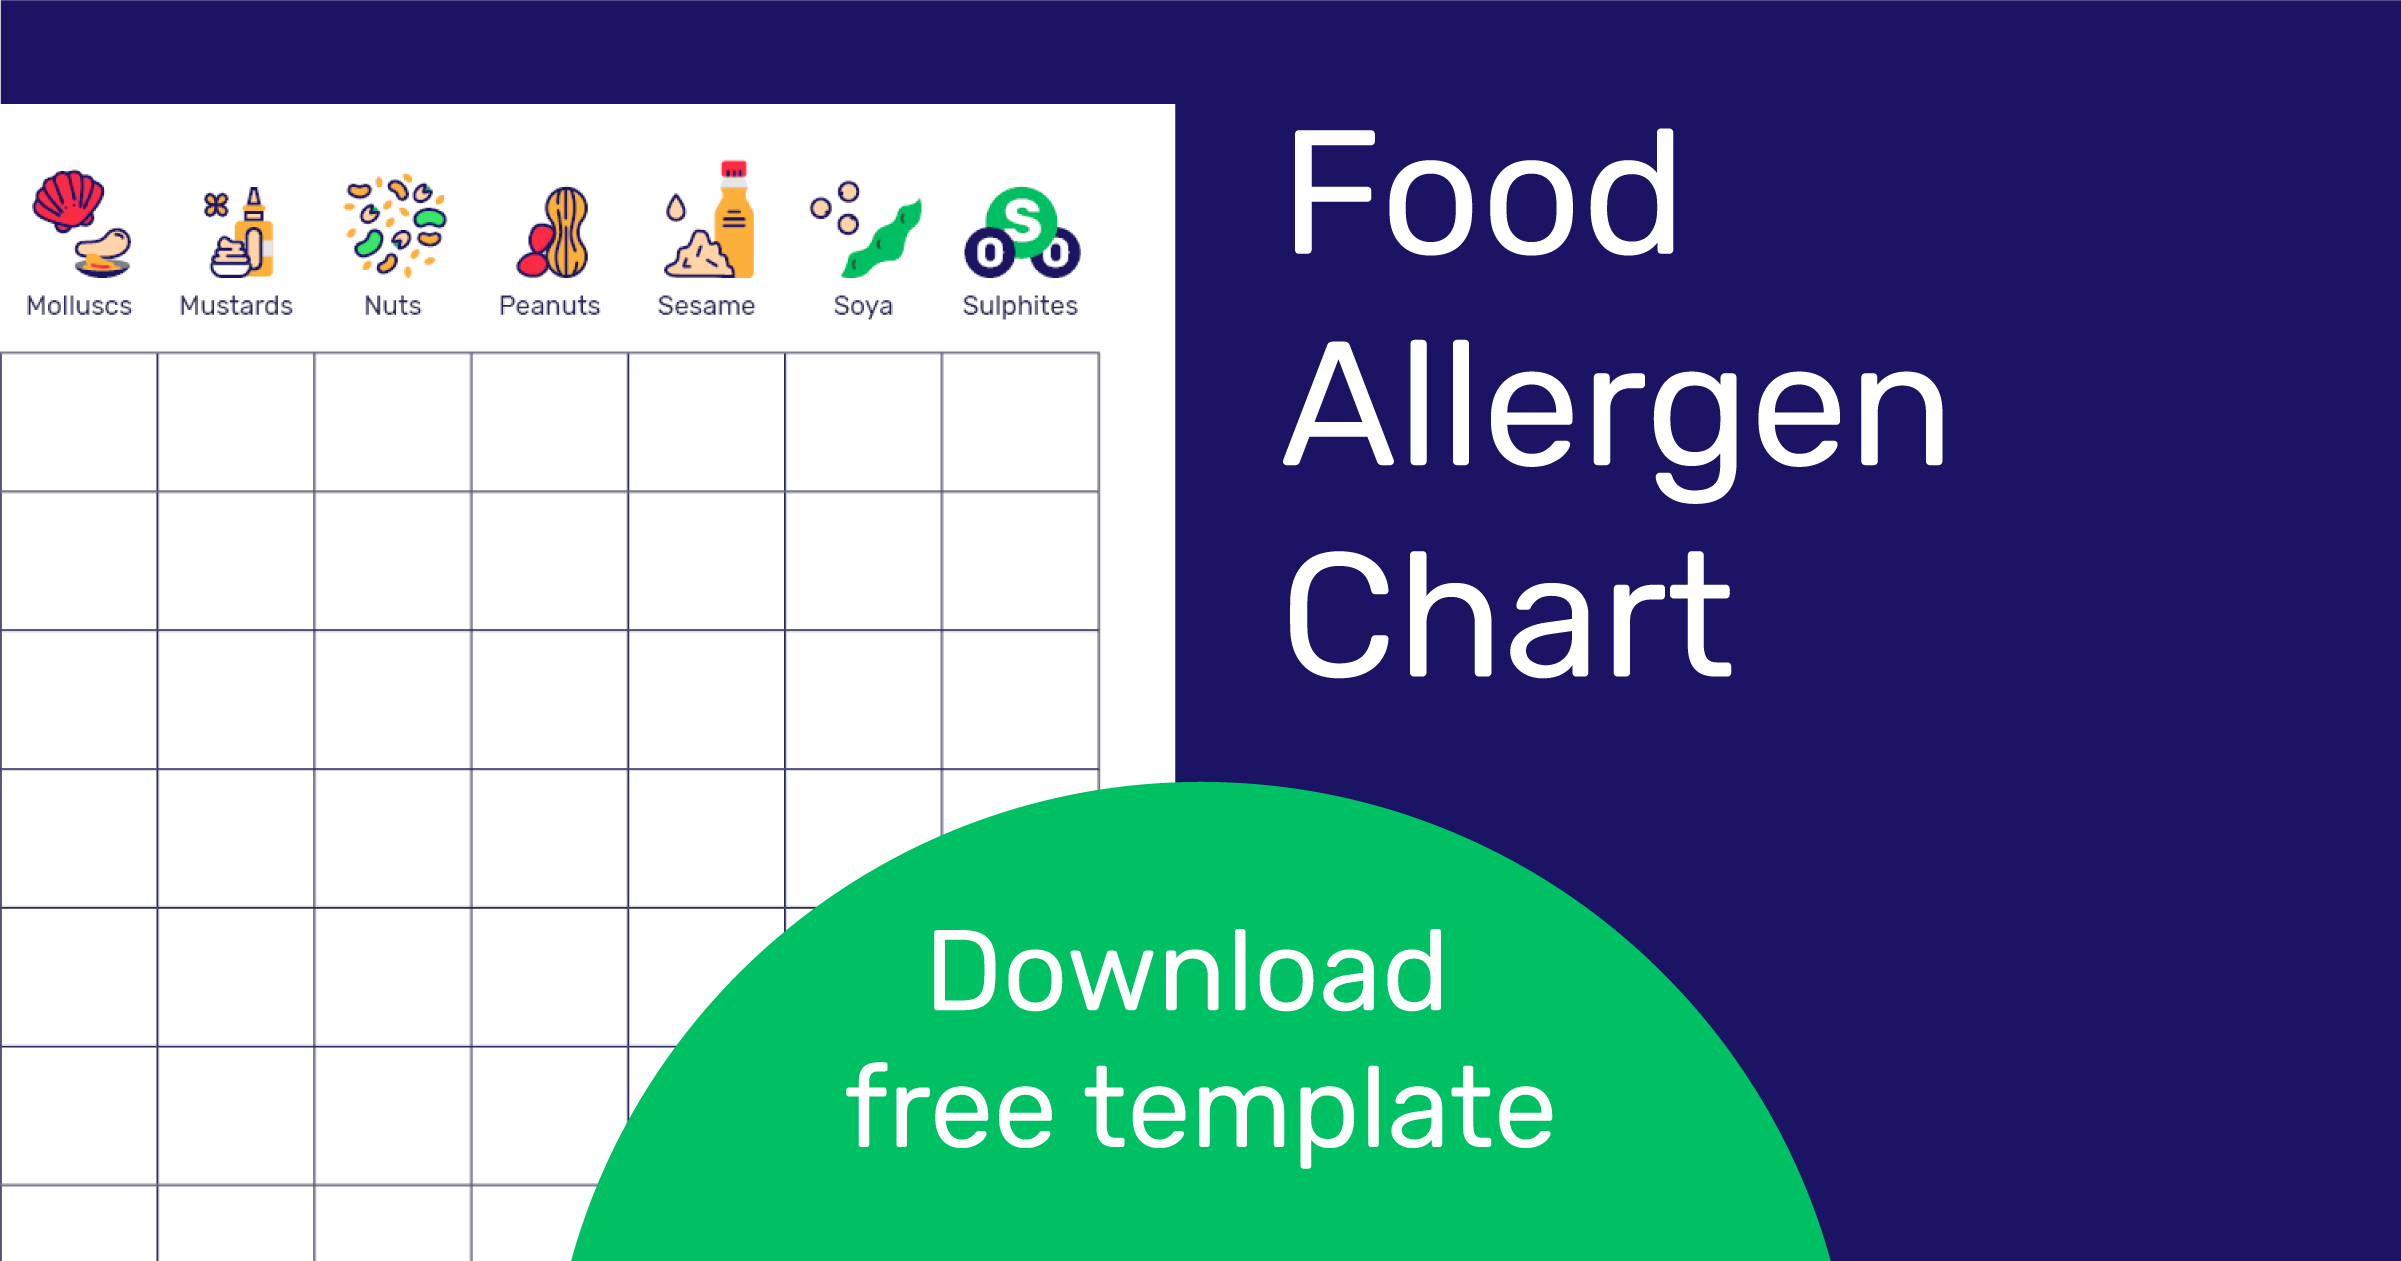 Food Allergen Chart Download Free Template